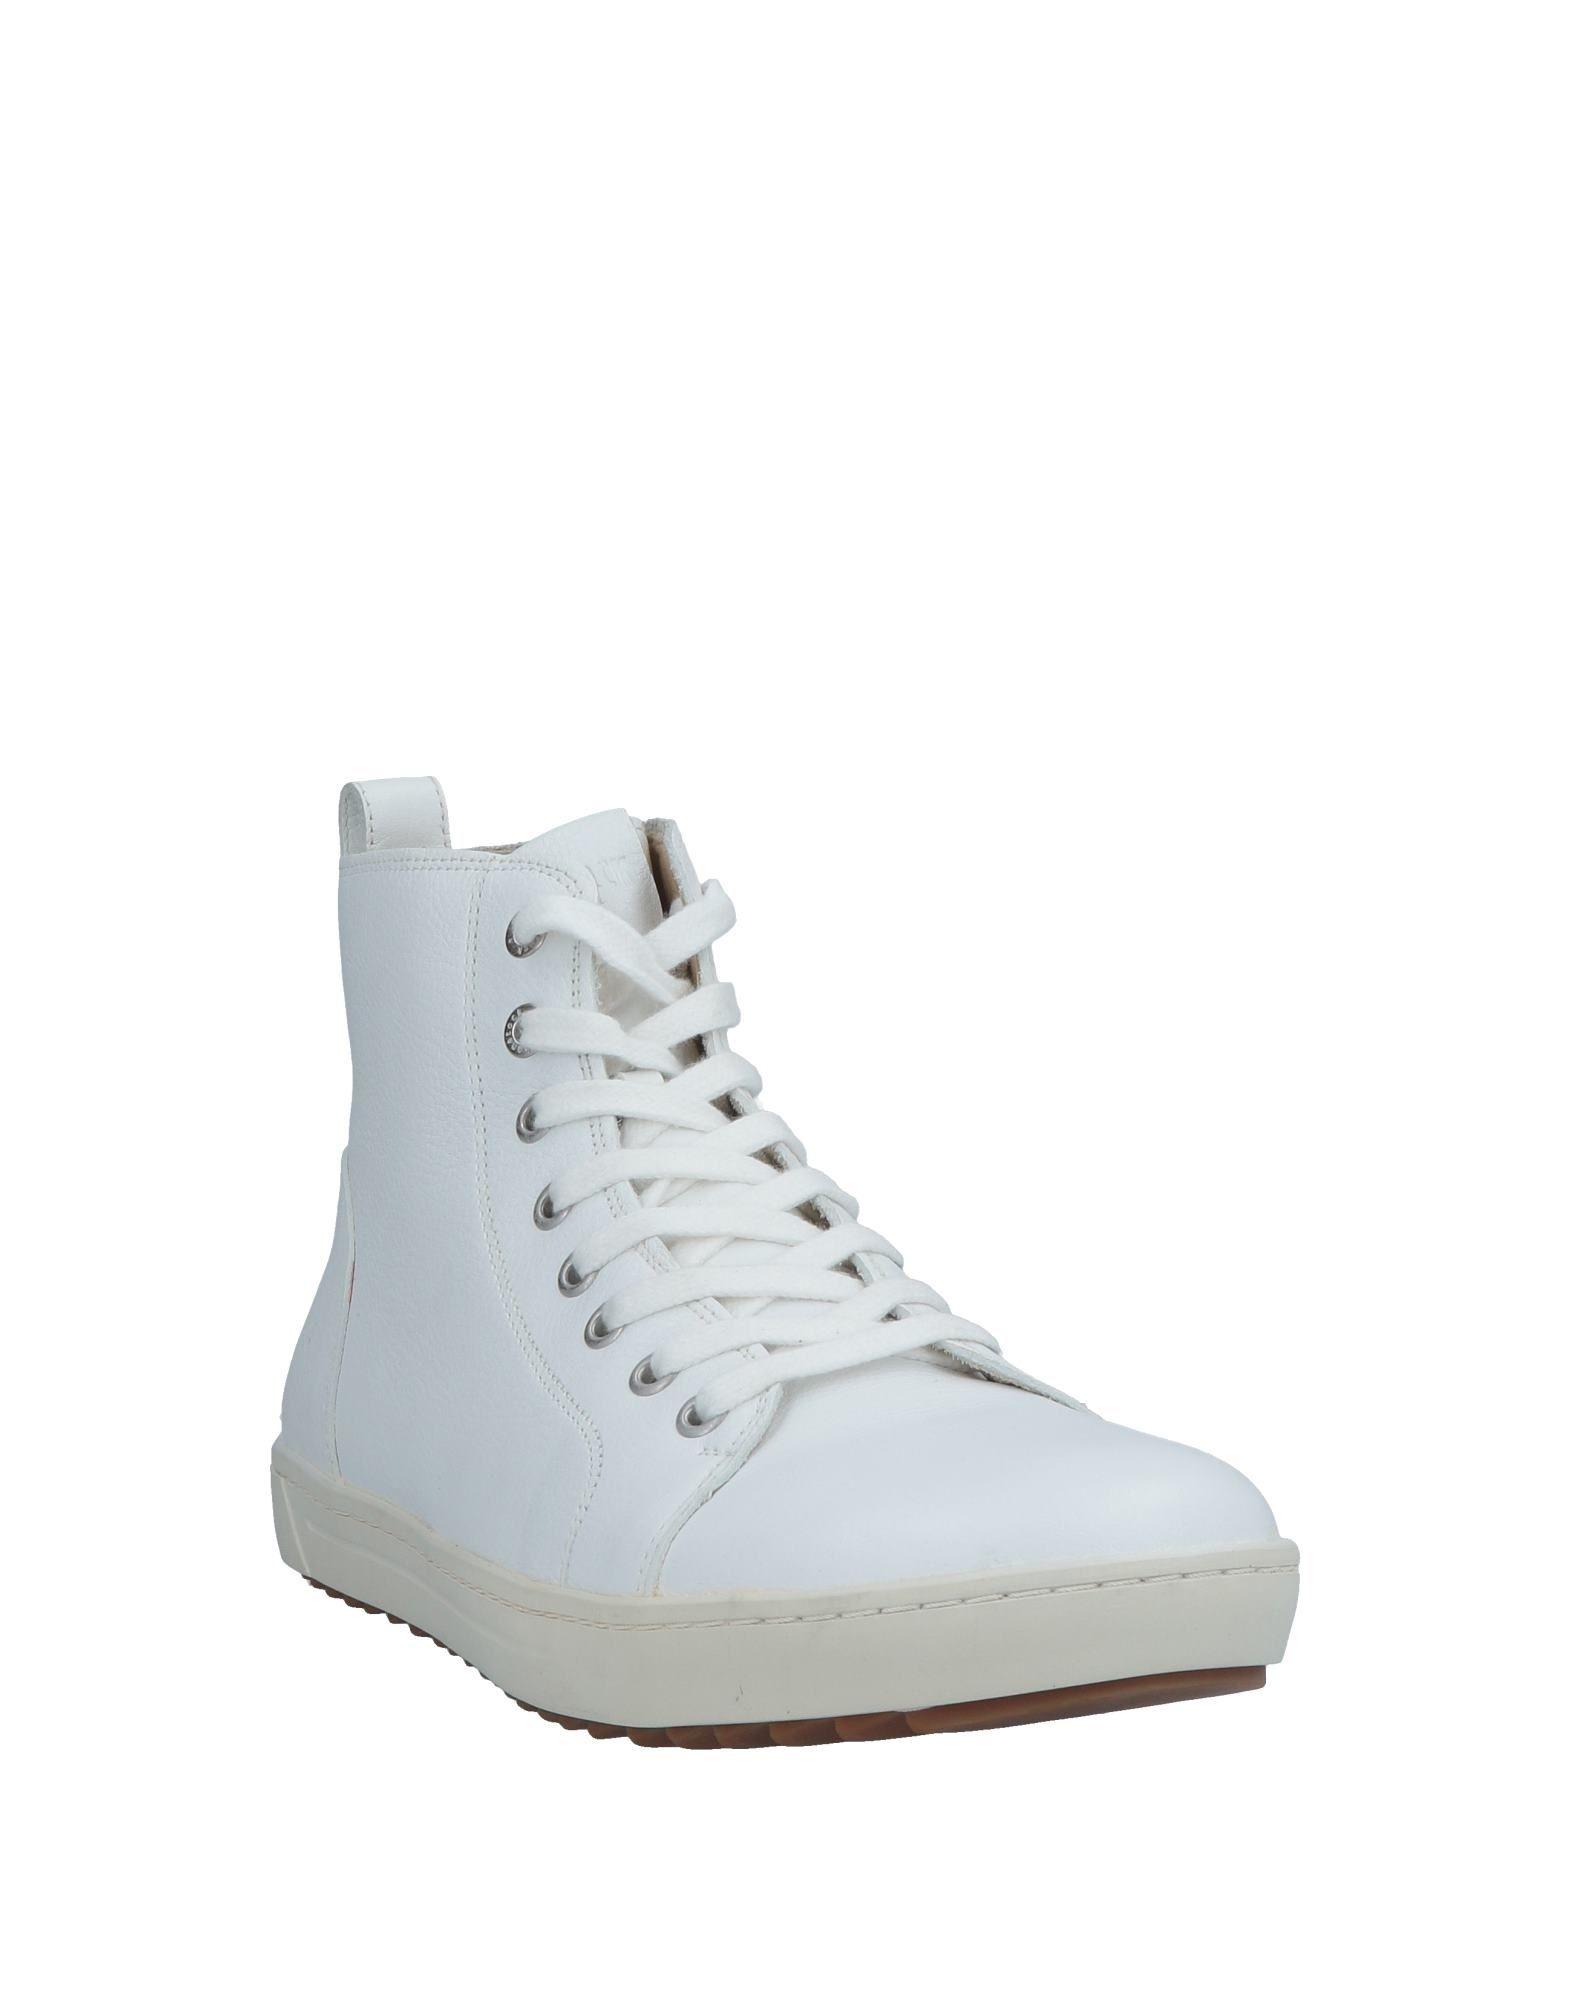 Birkenstock High-tops & Sneakers in White for Men - Lyst